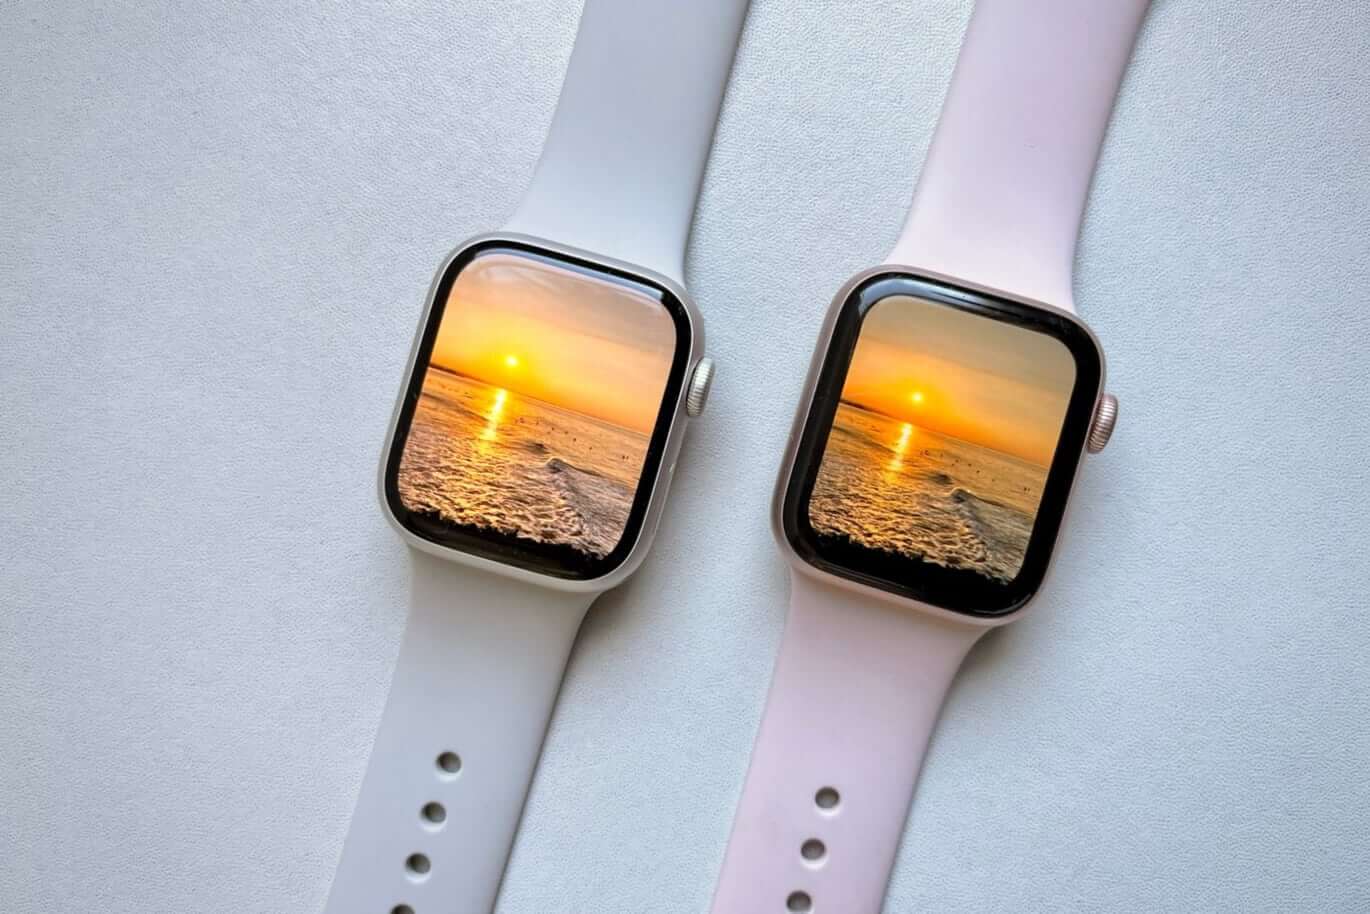 Apple Watch series 7 in aluminum